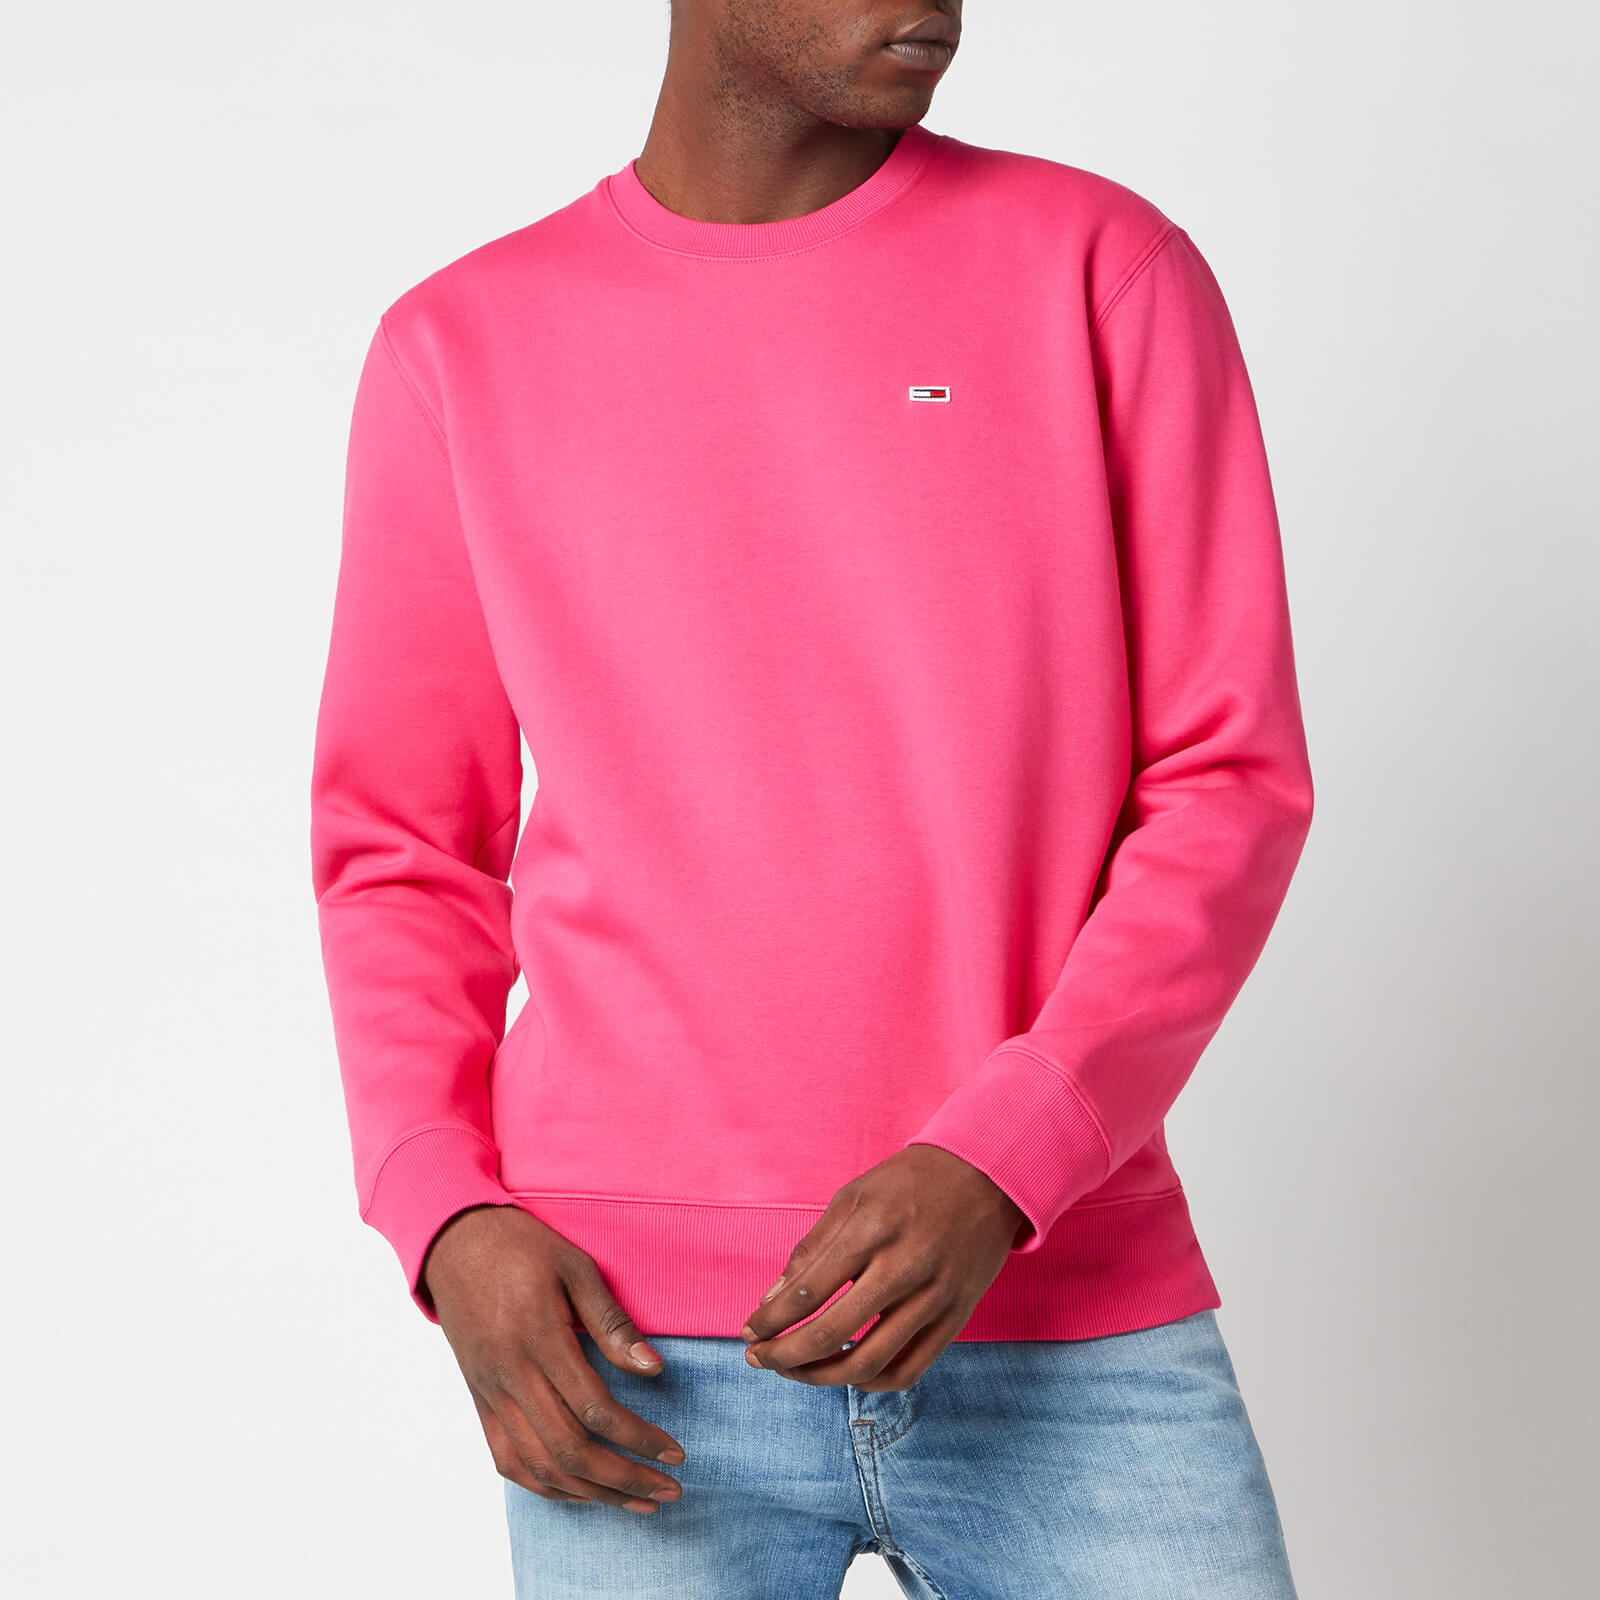 Tommy Jeans Men's Regular Fit Fleece Crewneck Sweatshirt - Bright Cerise Pink - S